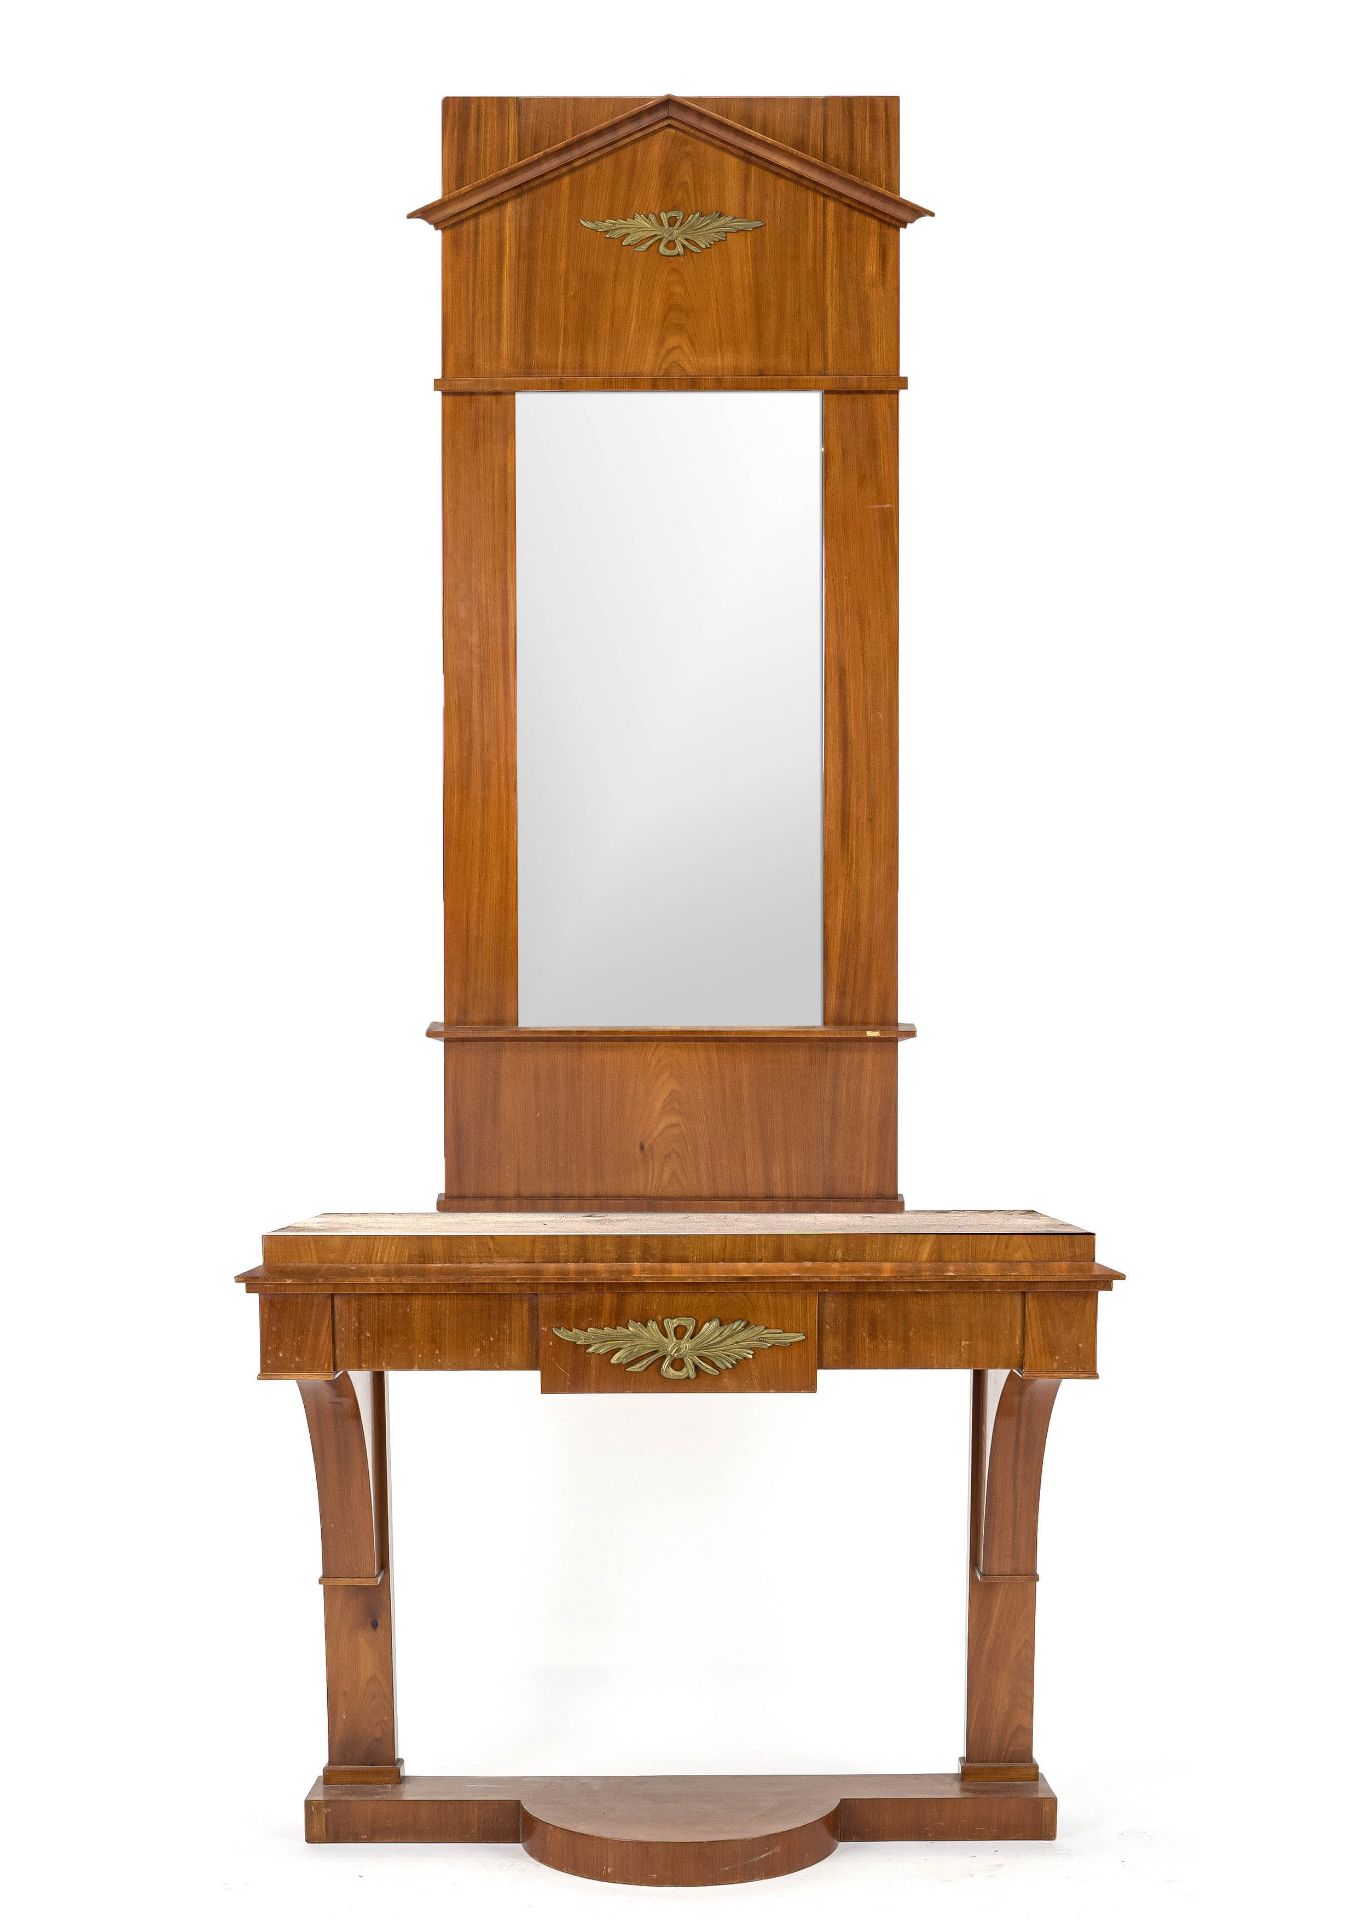 Wall mirror on console in Biedermeier style around 1900, mahogany, 240 x 95 x 47 cm